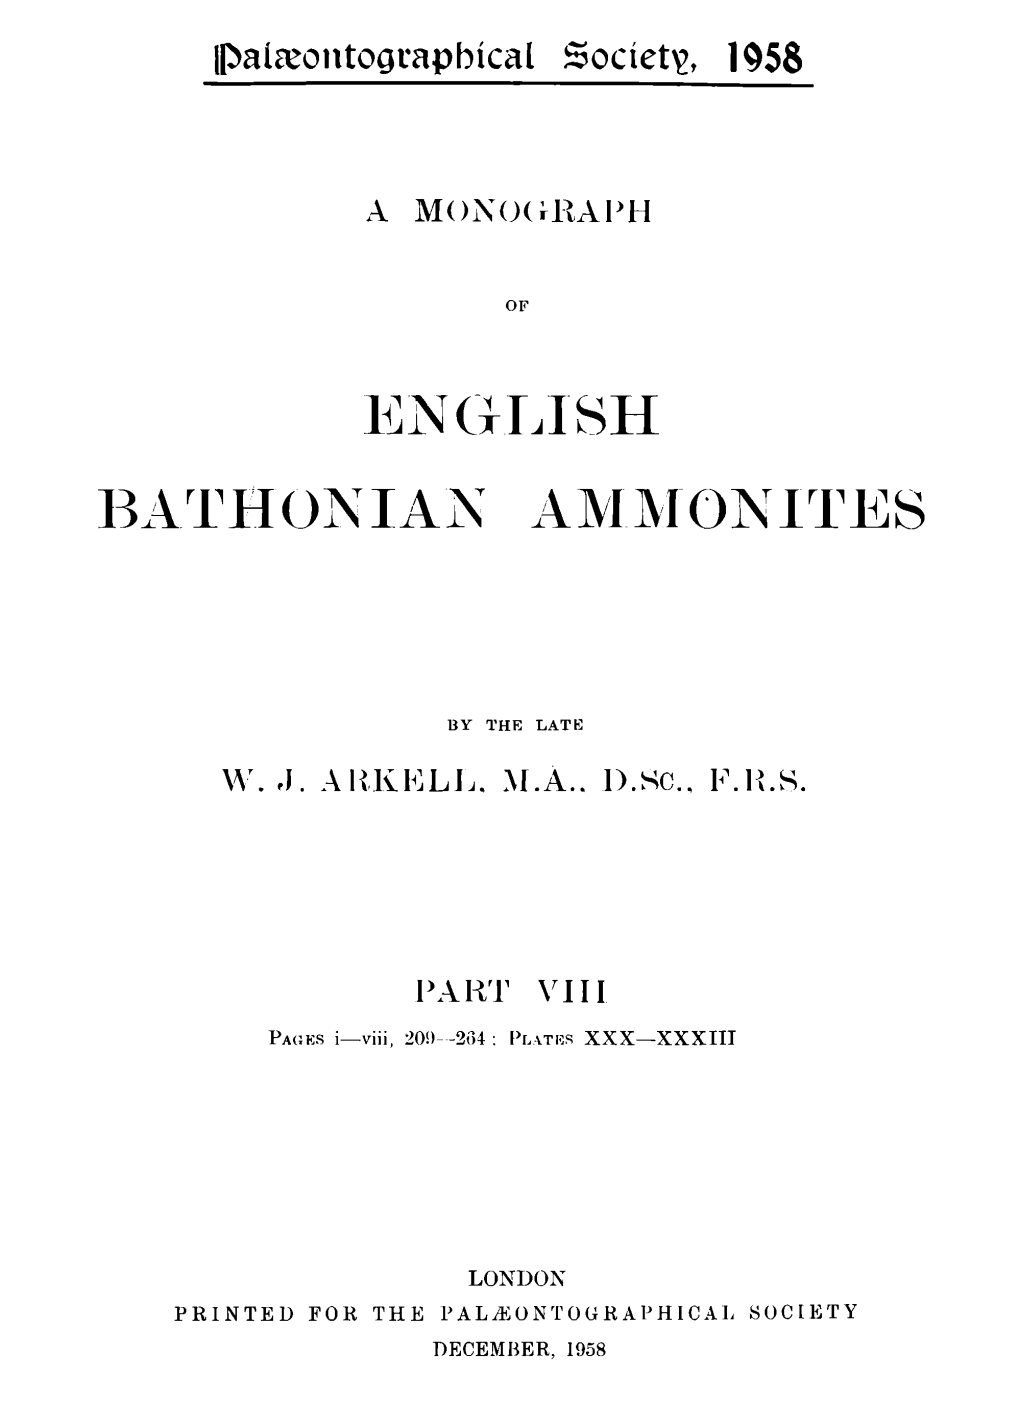 English Bathonian Ammonites